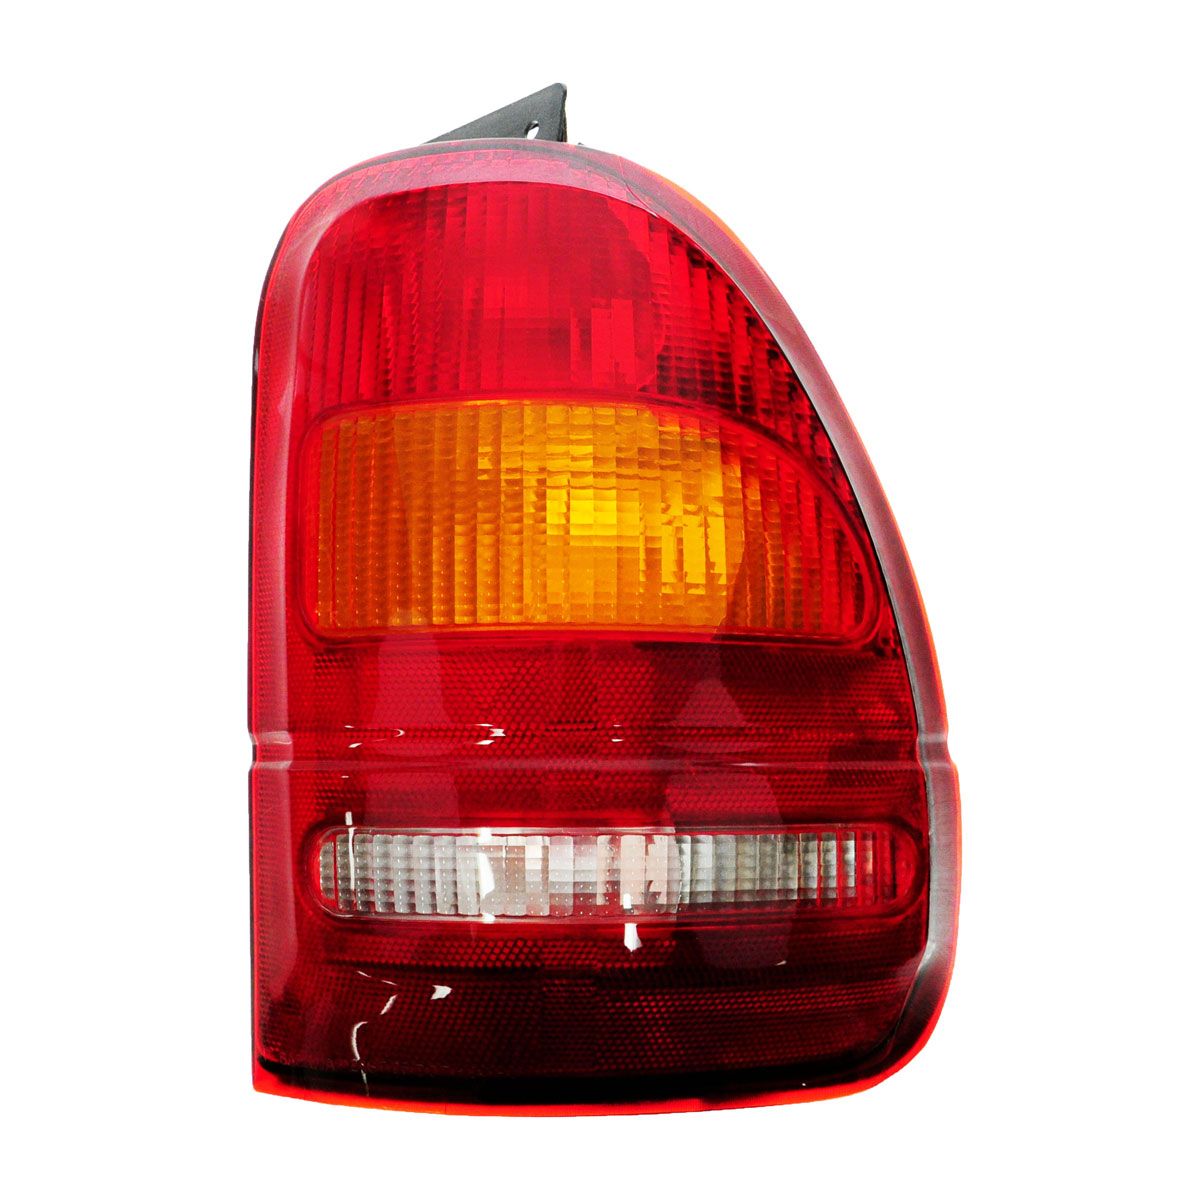 95-98 Windstar Van Taillight Taillamp Rear Brake Light Lamp Right Passenger Side